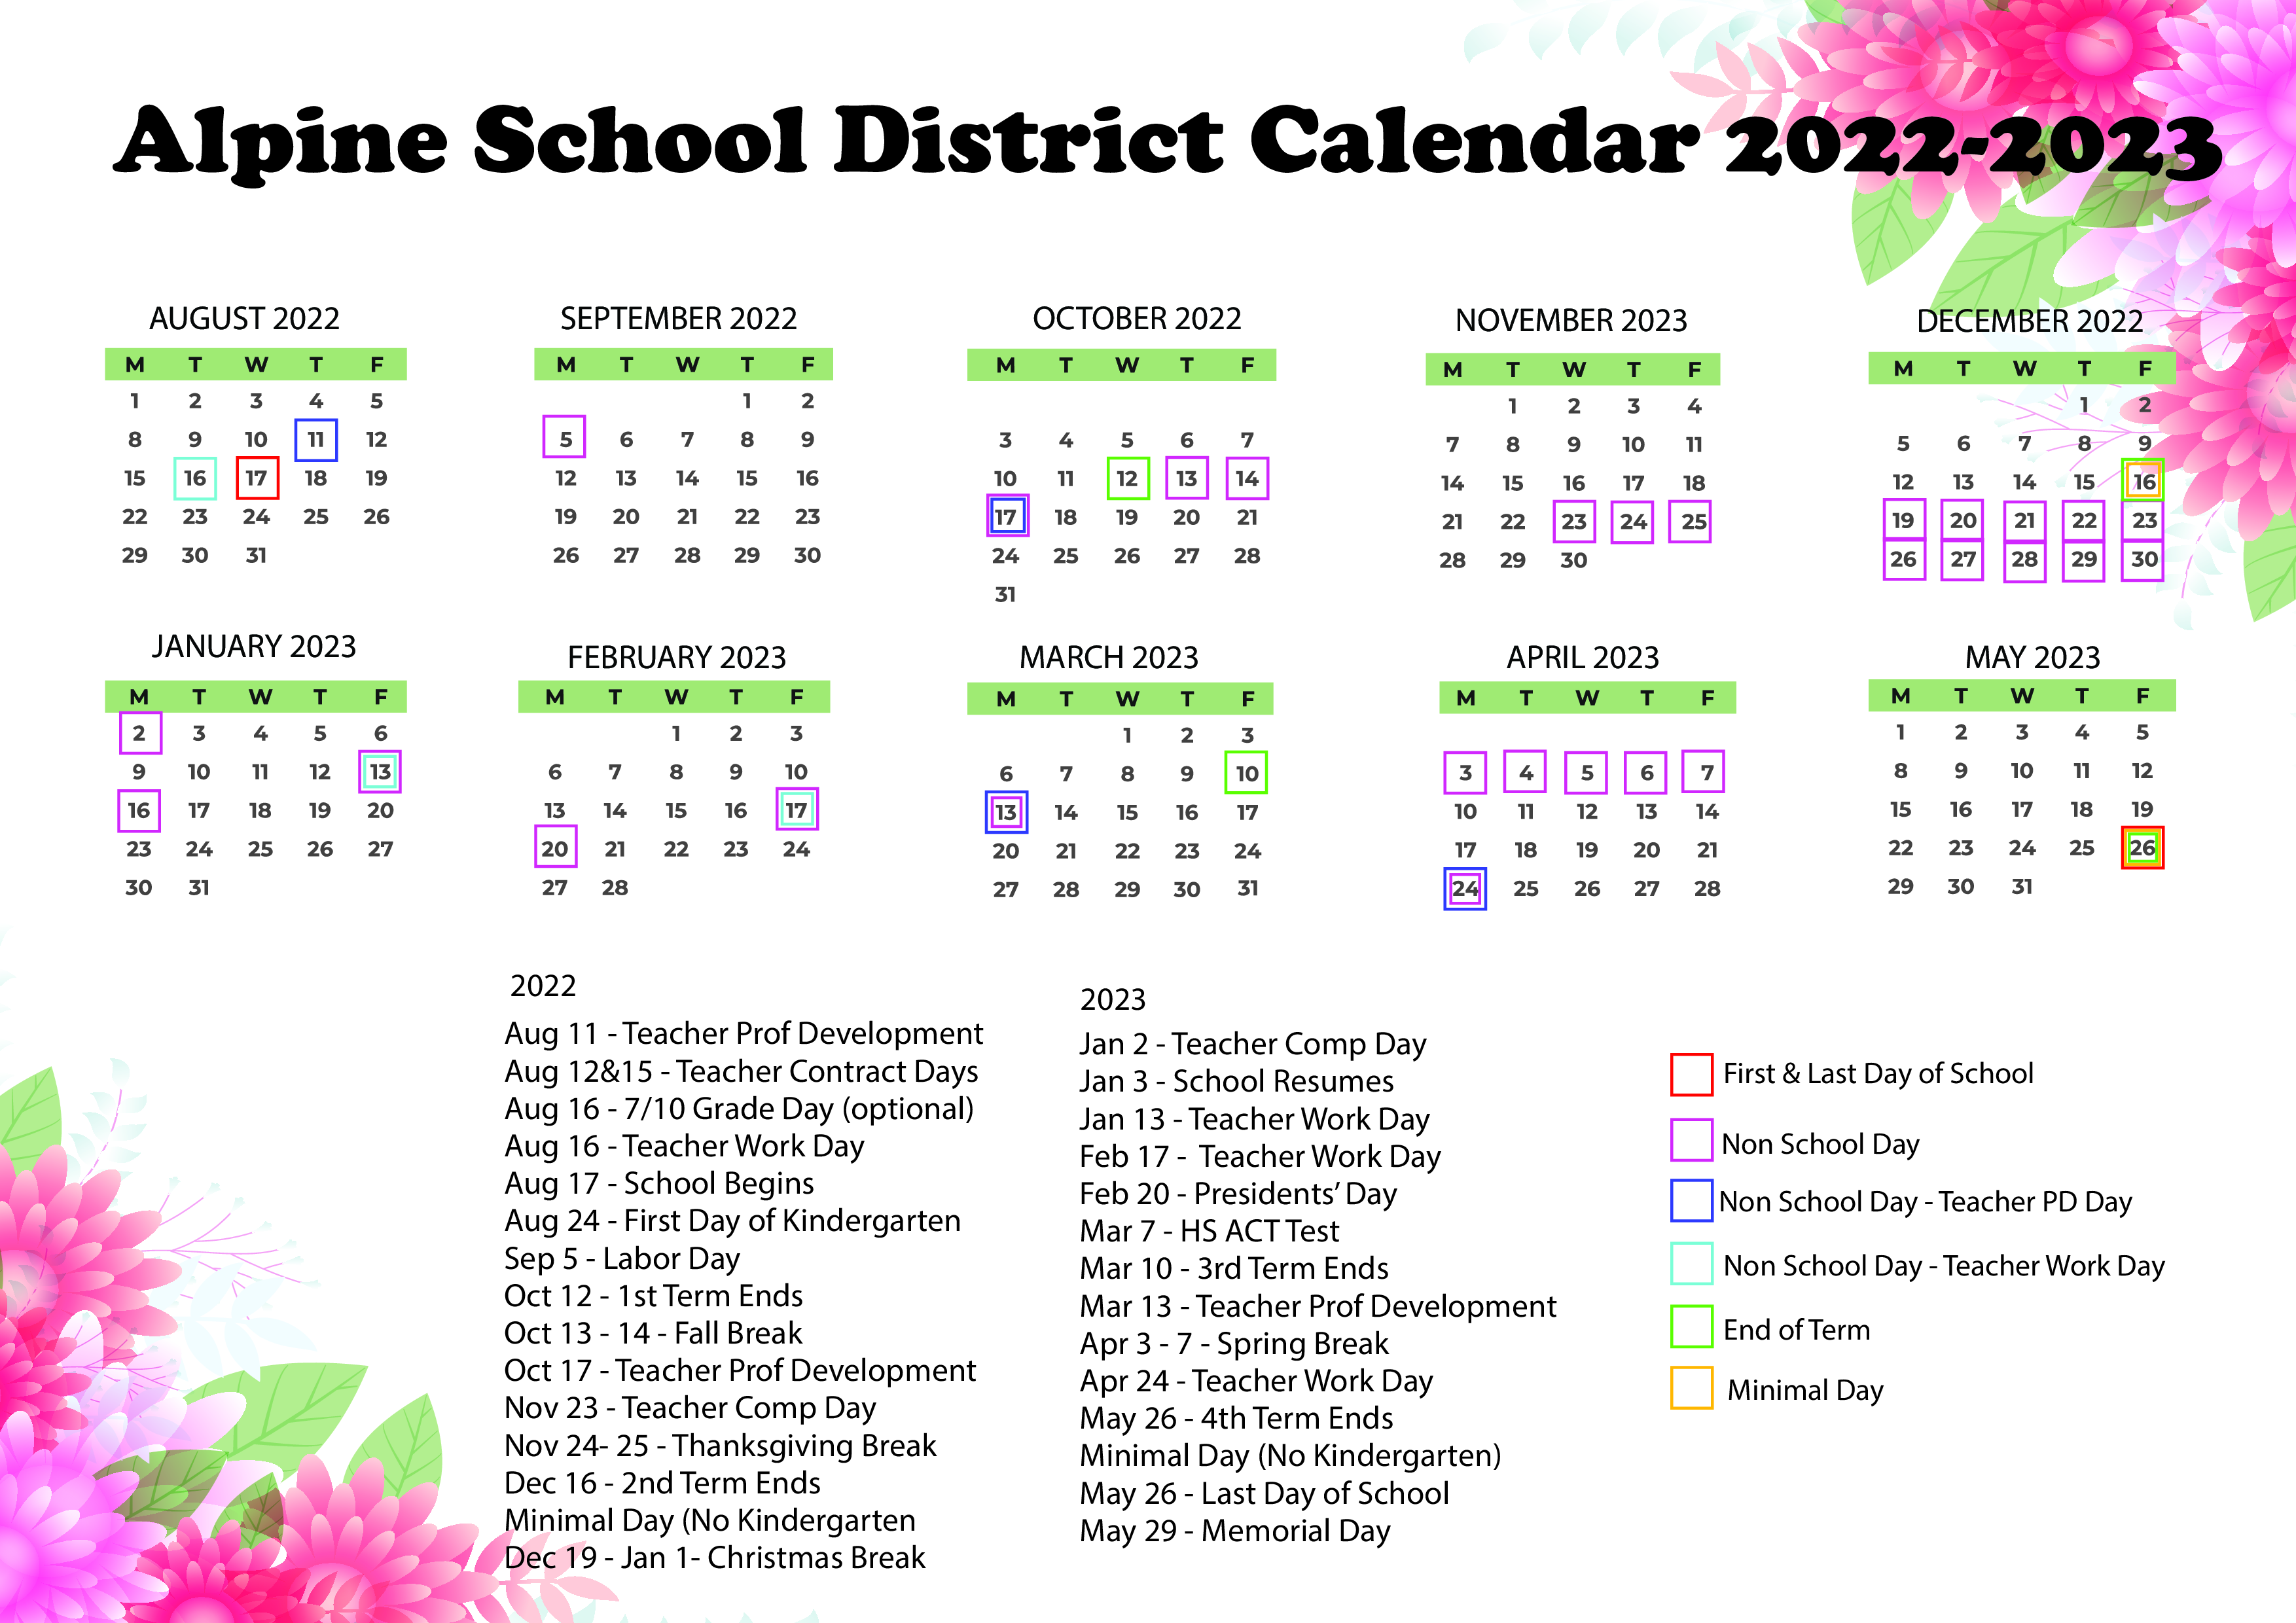 Alpine School District Calendar with Holidays 2022-2023